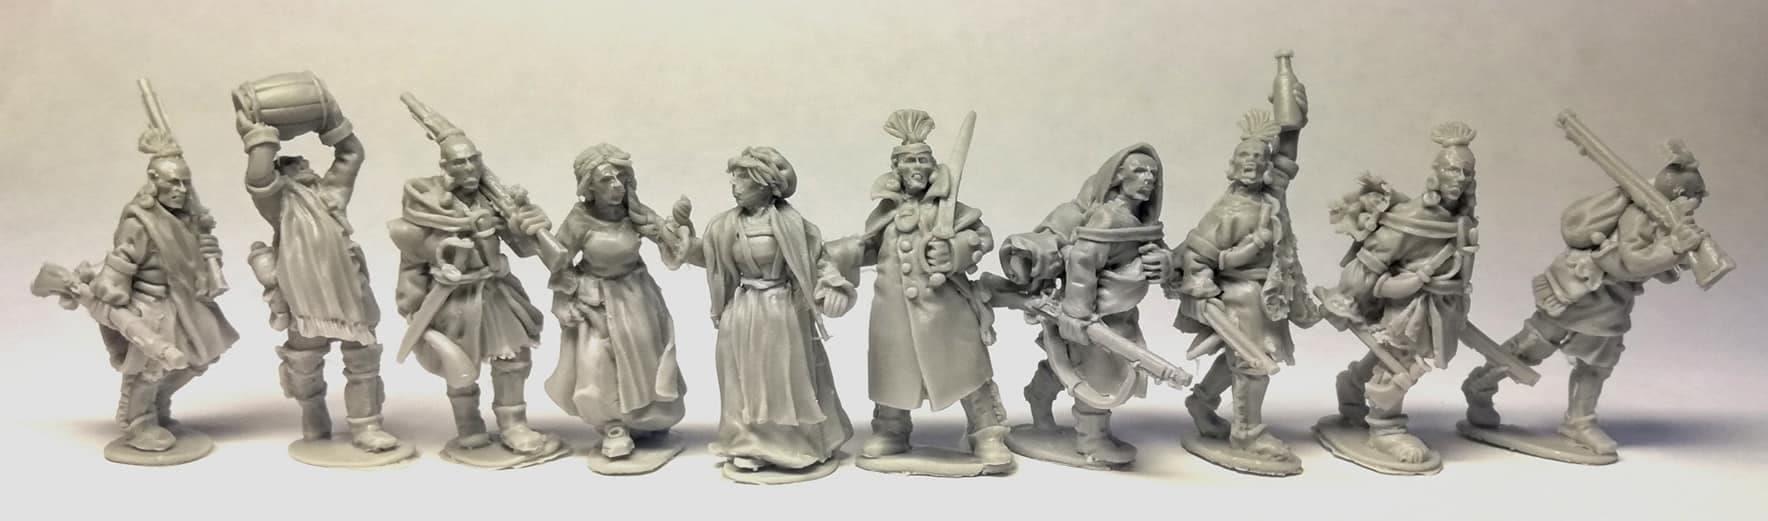 Ratnik Miniatures - French Indian War Natives - Winter Dress